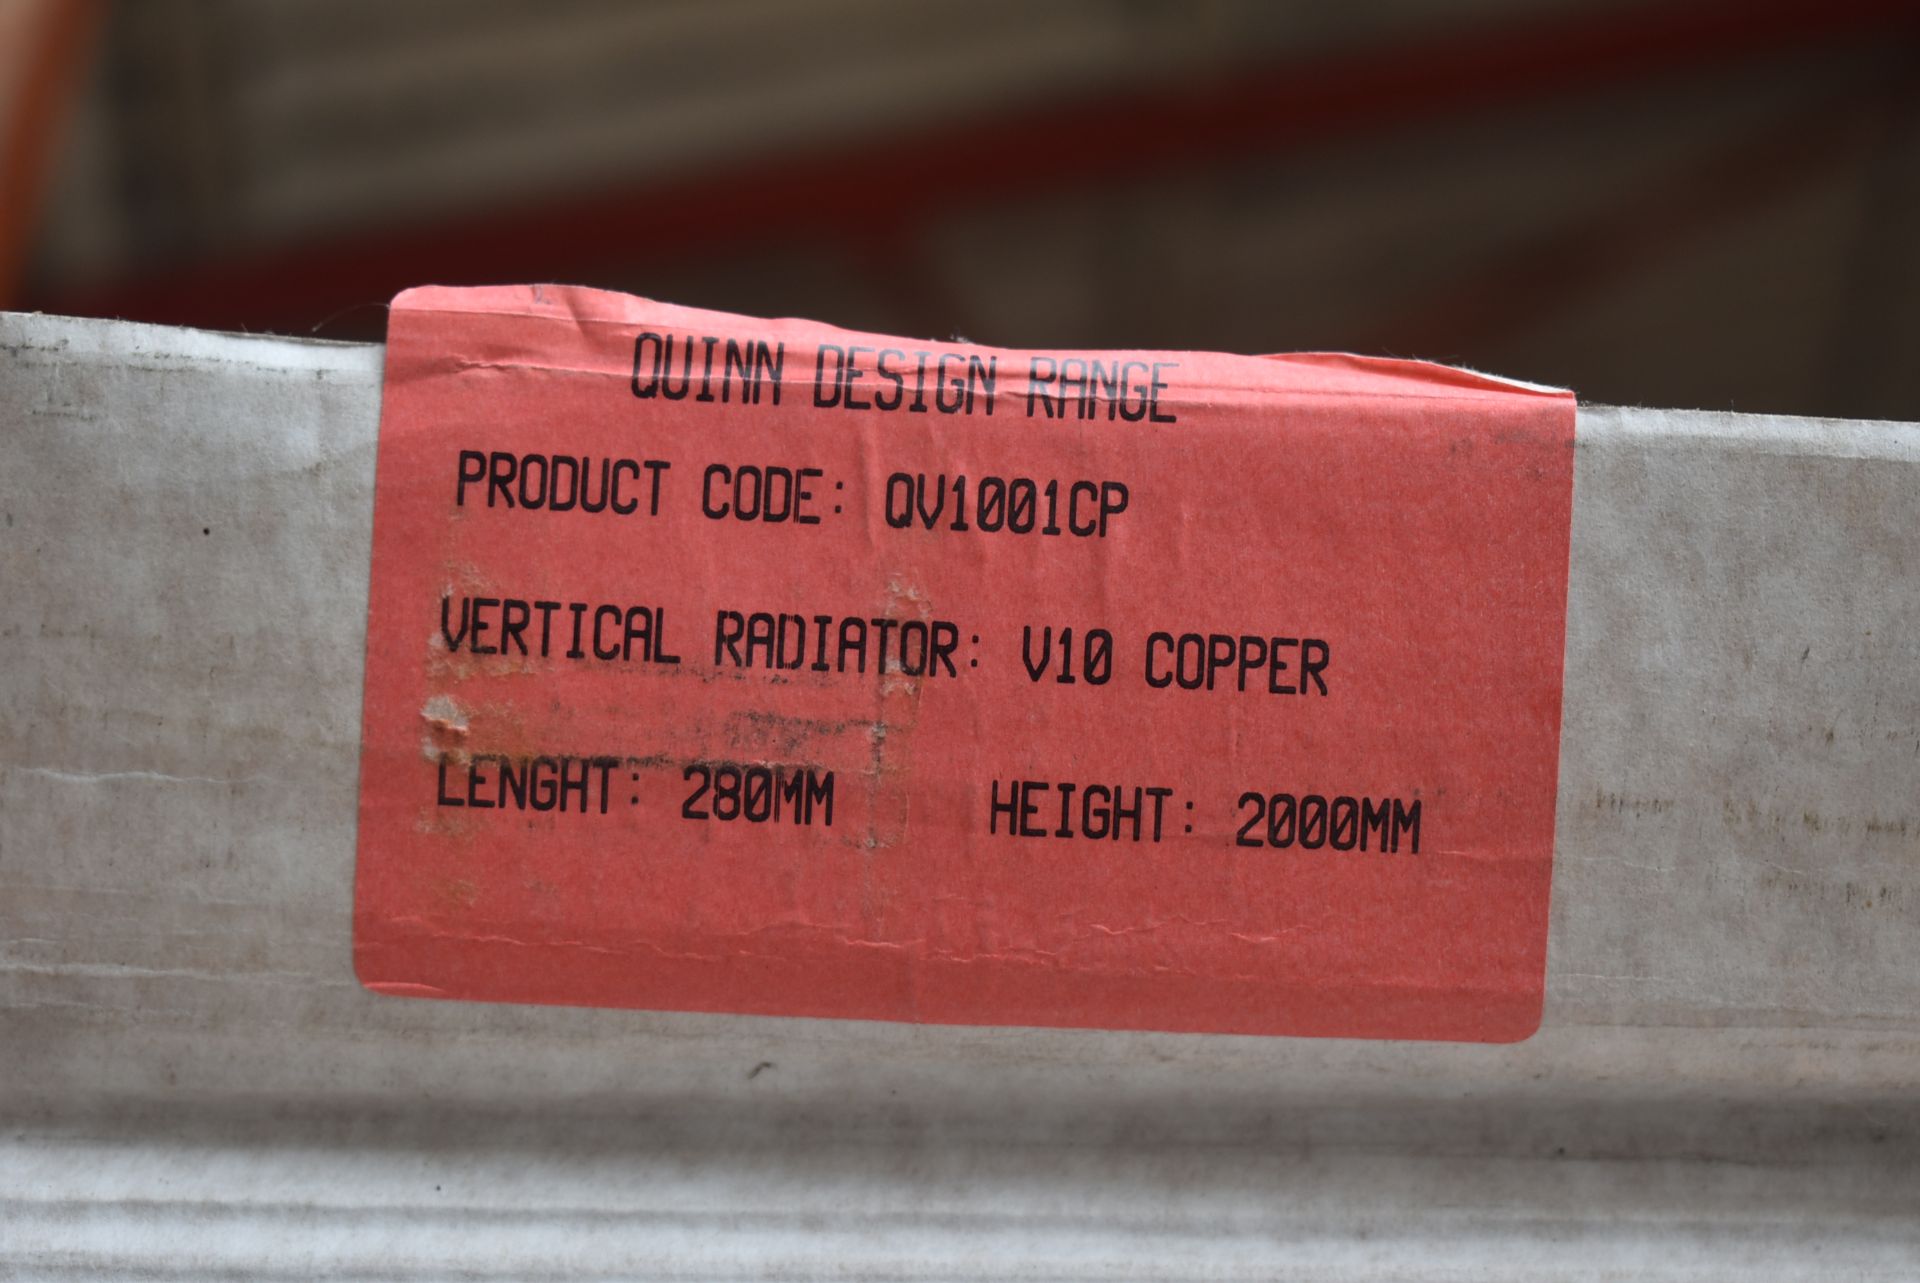 1 x Quinn Single Panel Vertical Radiator in Victorian Copper - Contemporary Design - BTU 4944 - 1449 - Image 3 of 5